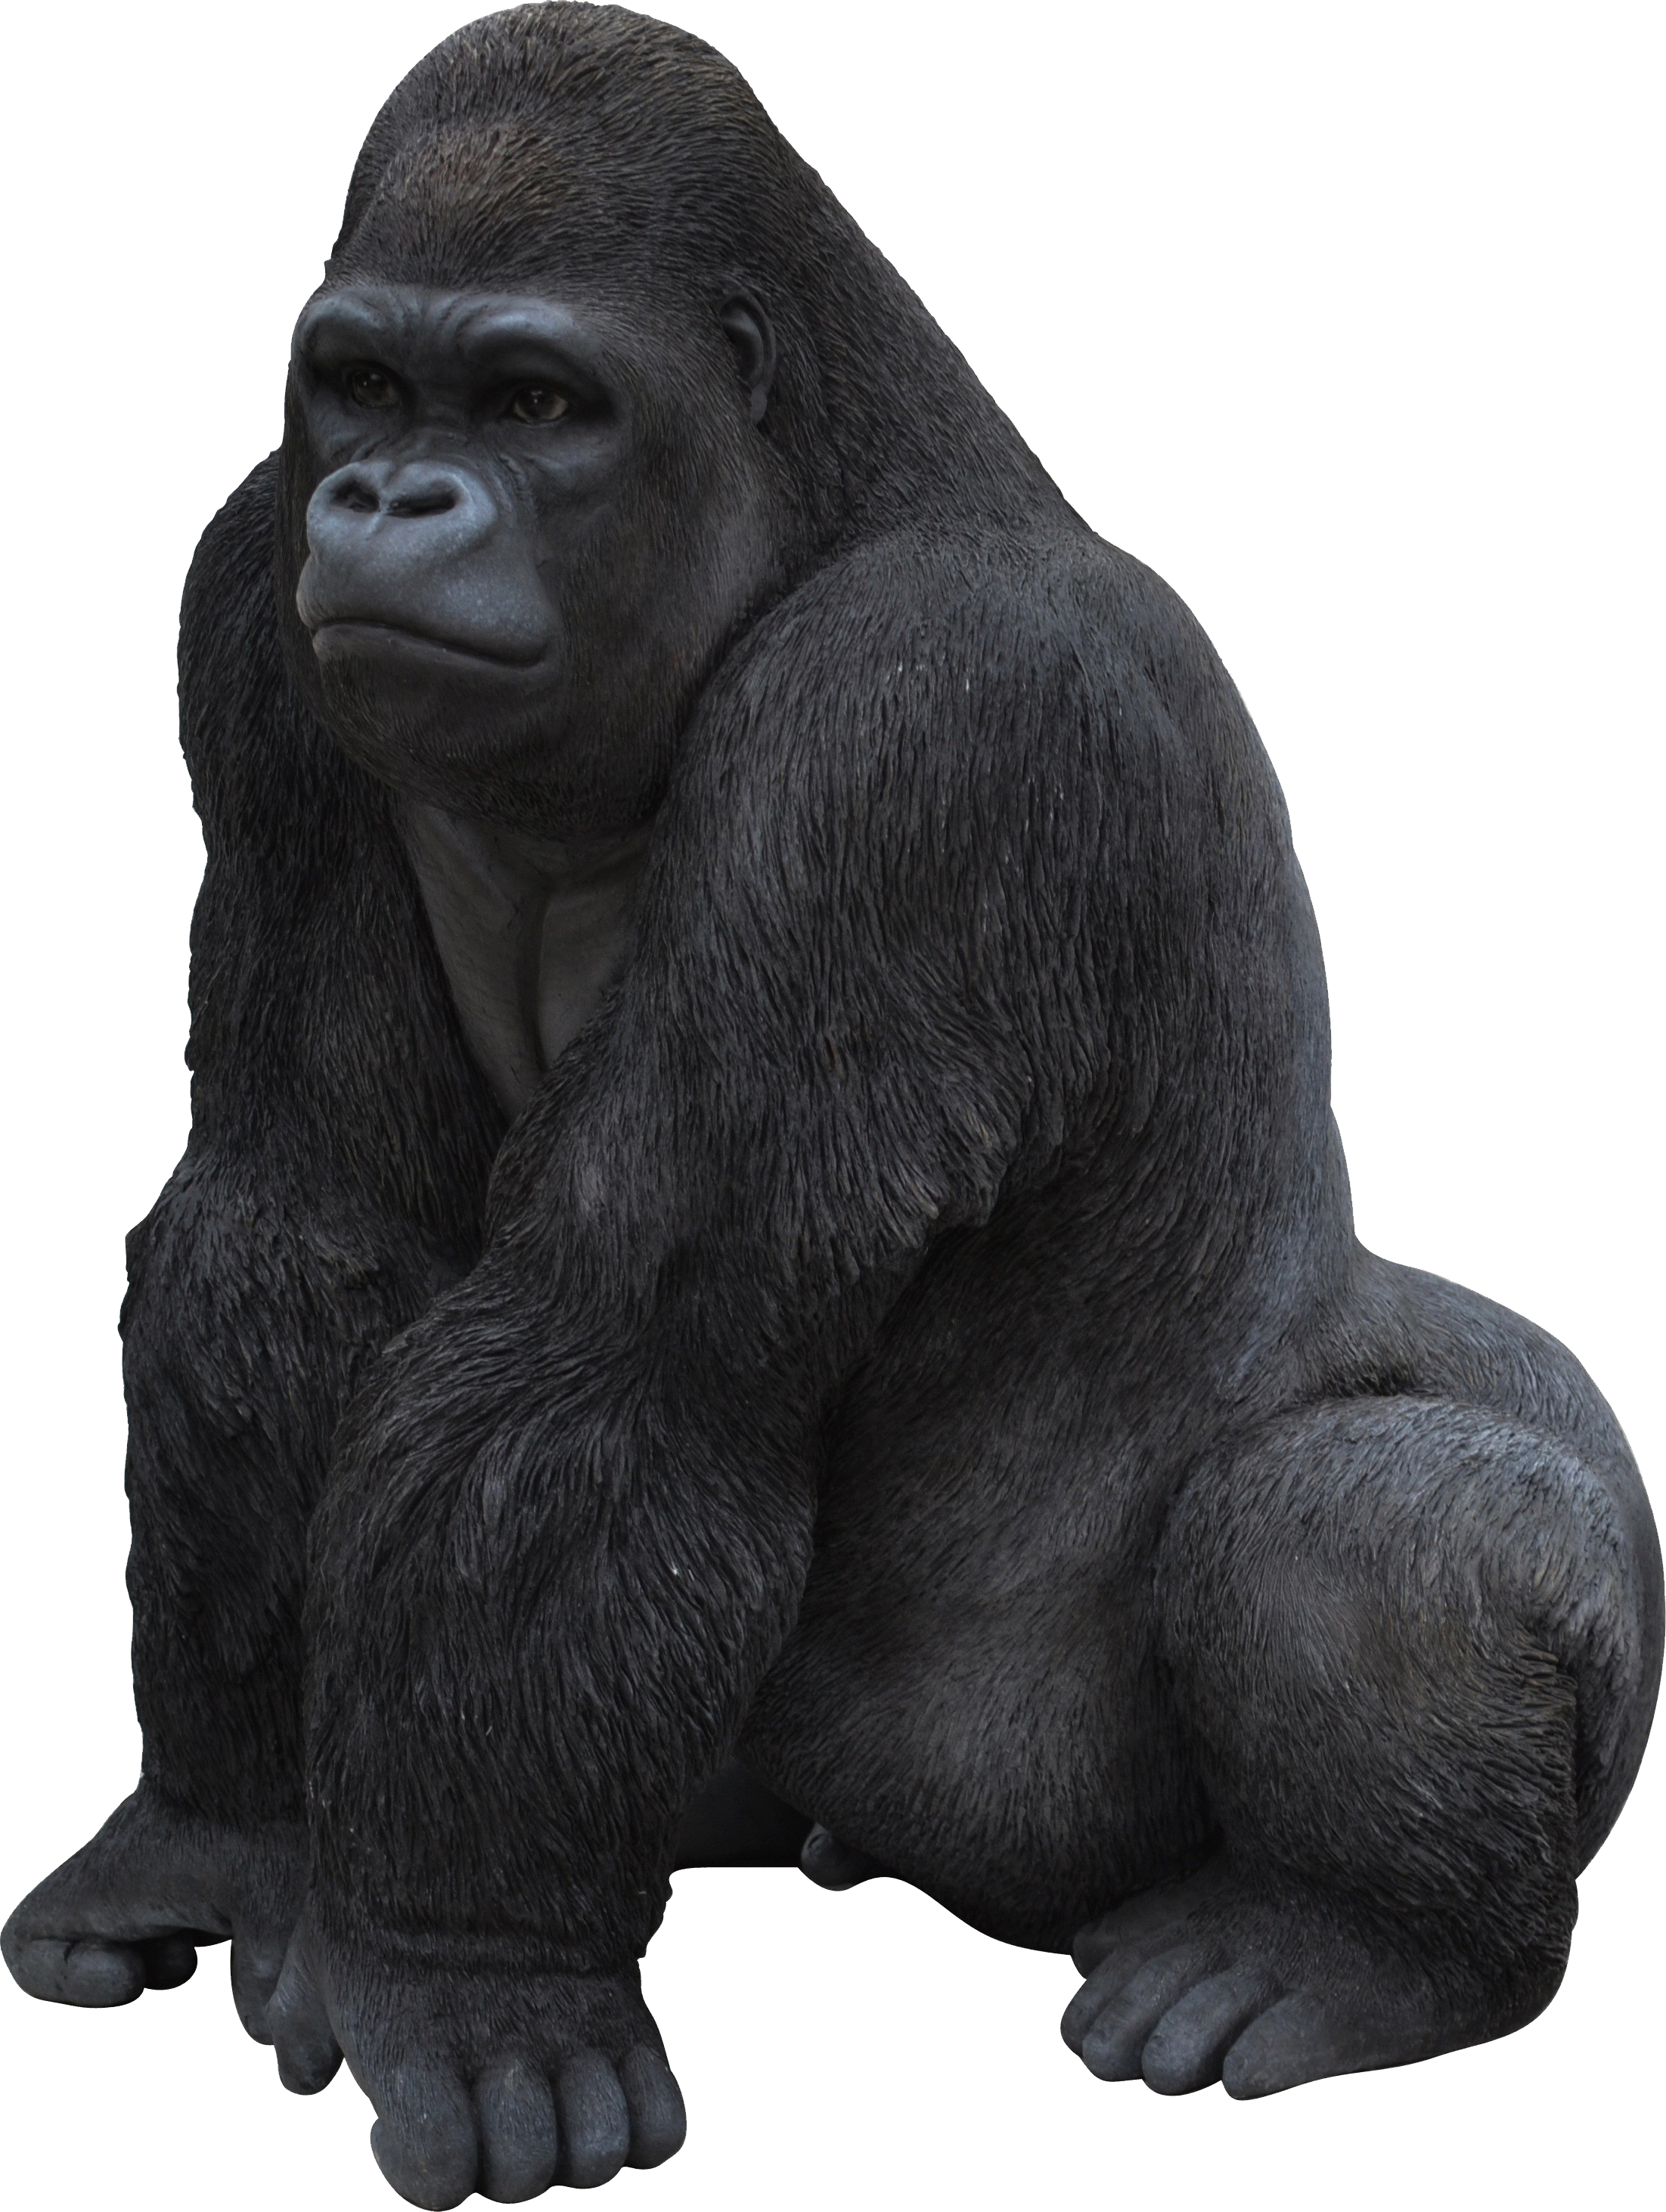 Gorilla Png Image PNG Image